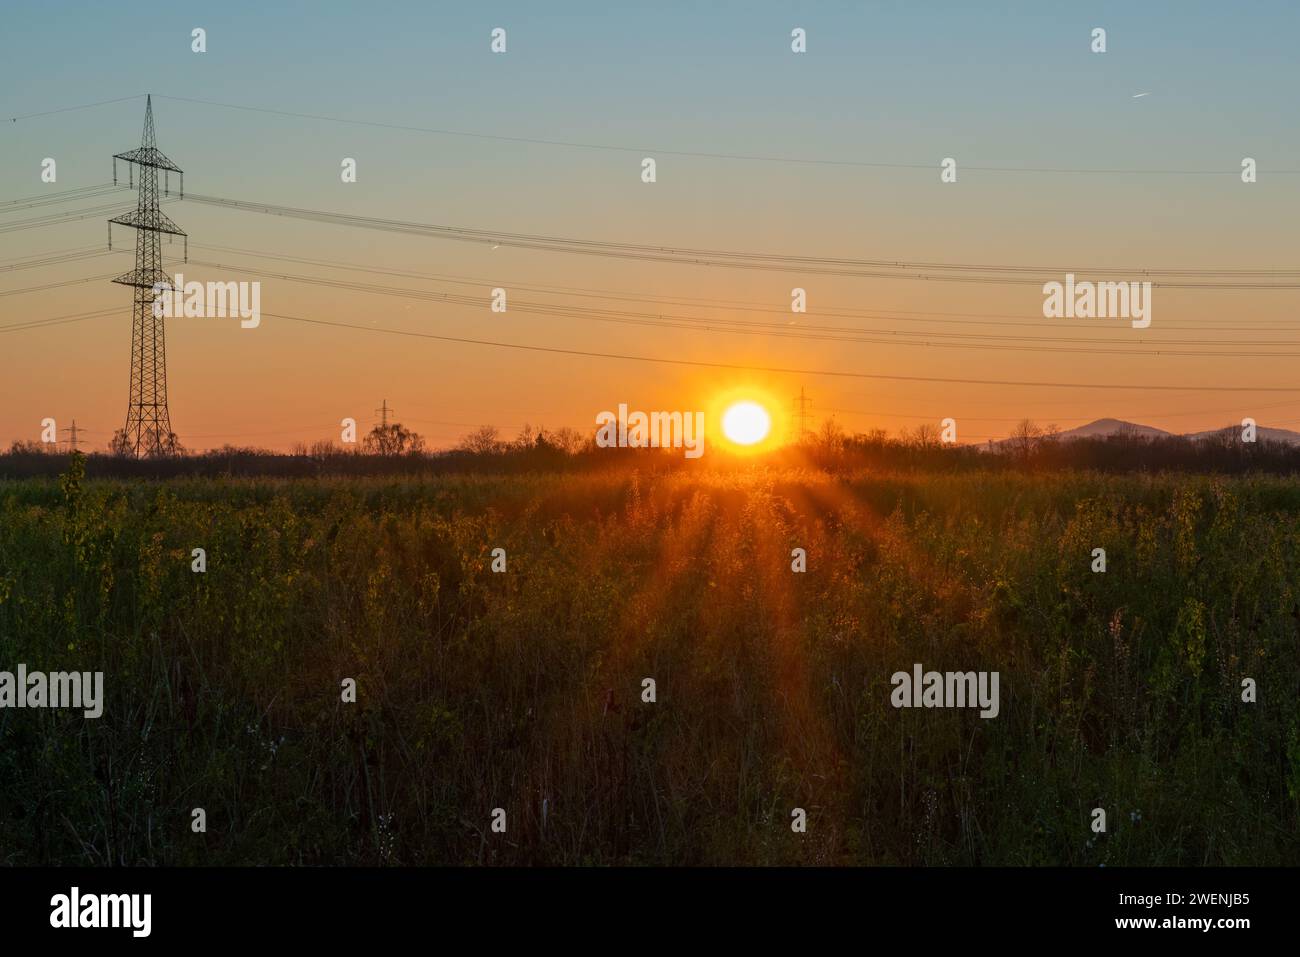 Sonnenaufgang über Feld mit Strommast Stock Photo